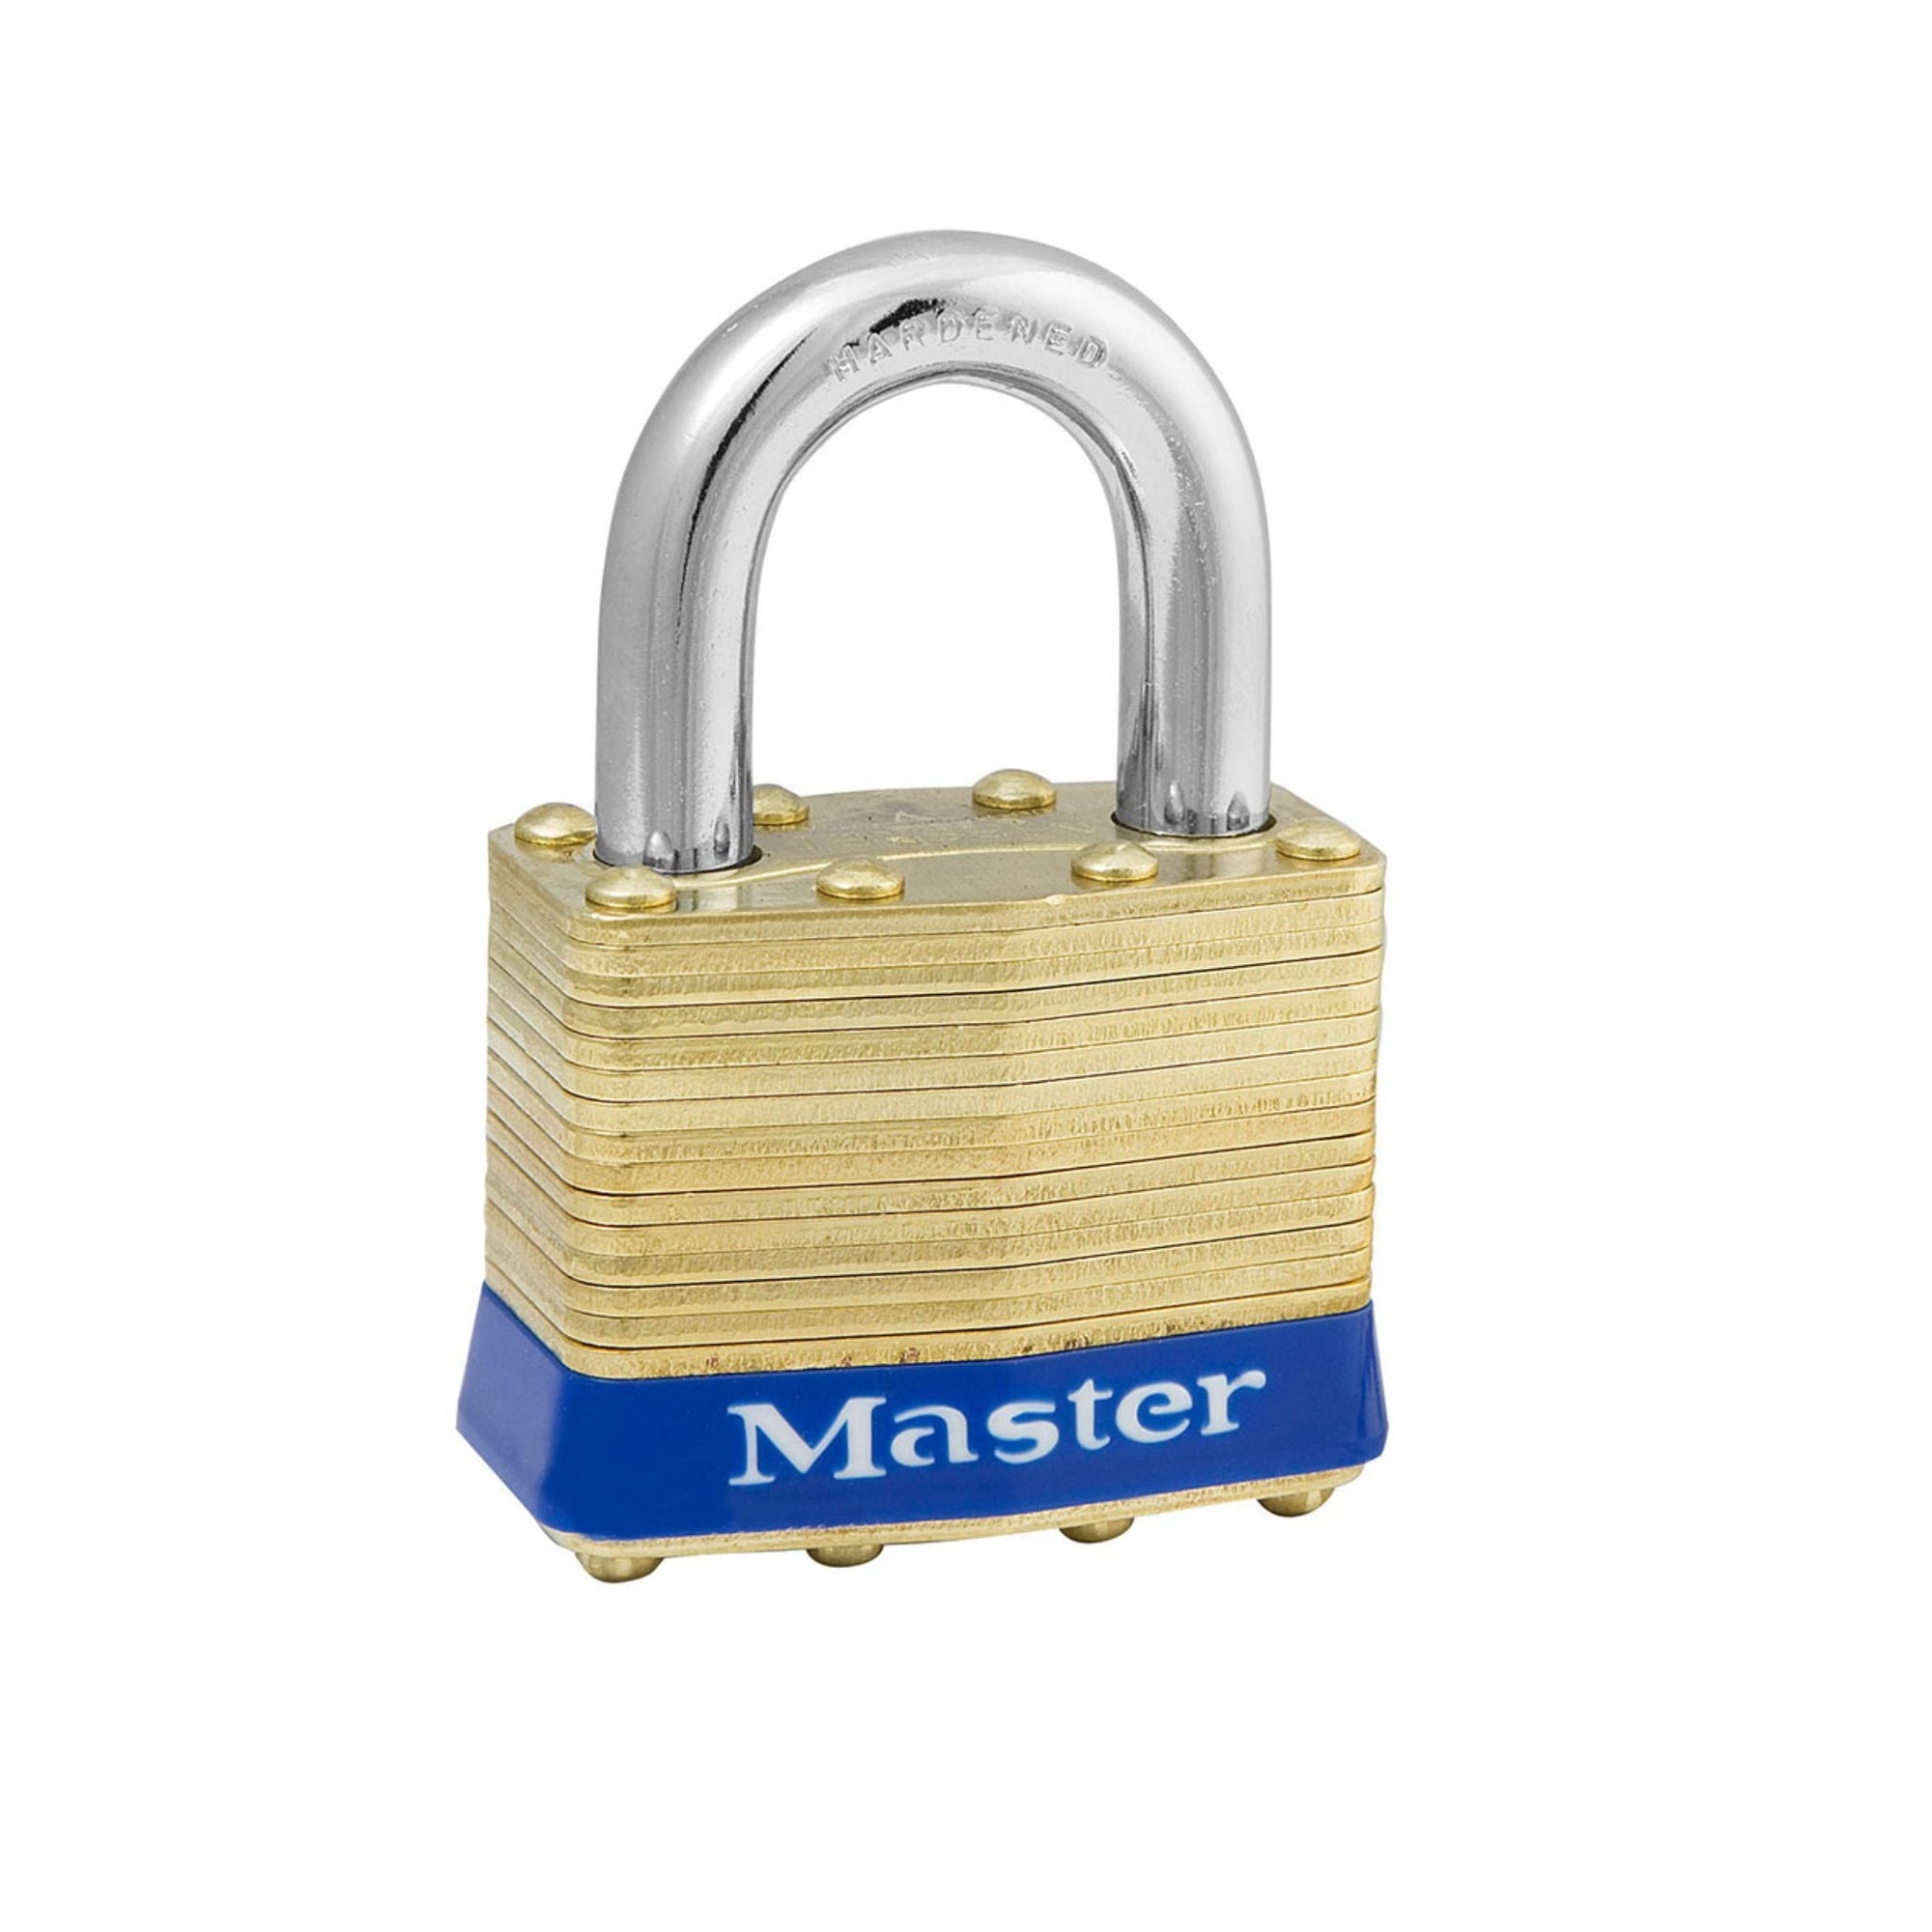 Master Lock 2KA 0313 Lock Laminated brass No. 2 Series Padlock Keyed to Match Existing Key Number KA0313 - The Lock Source